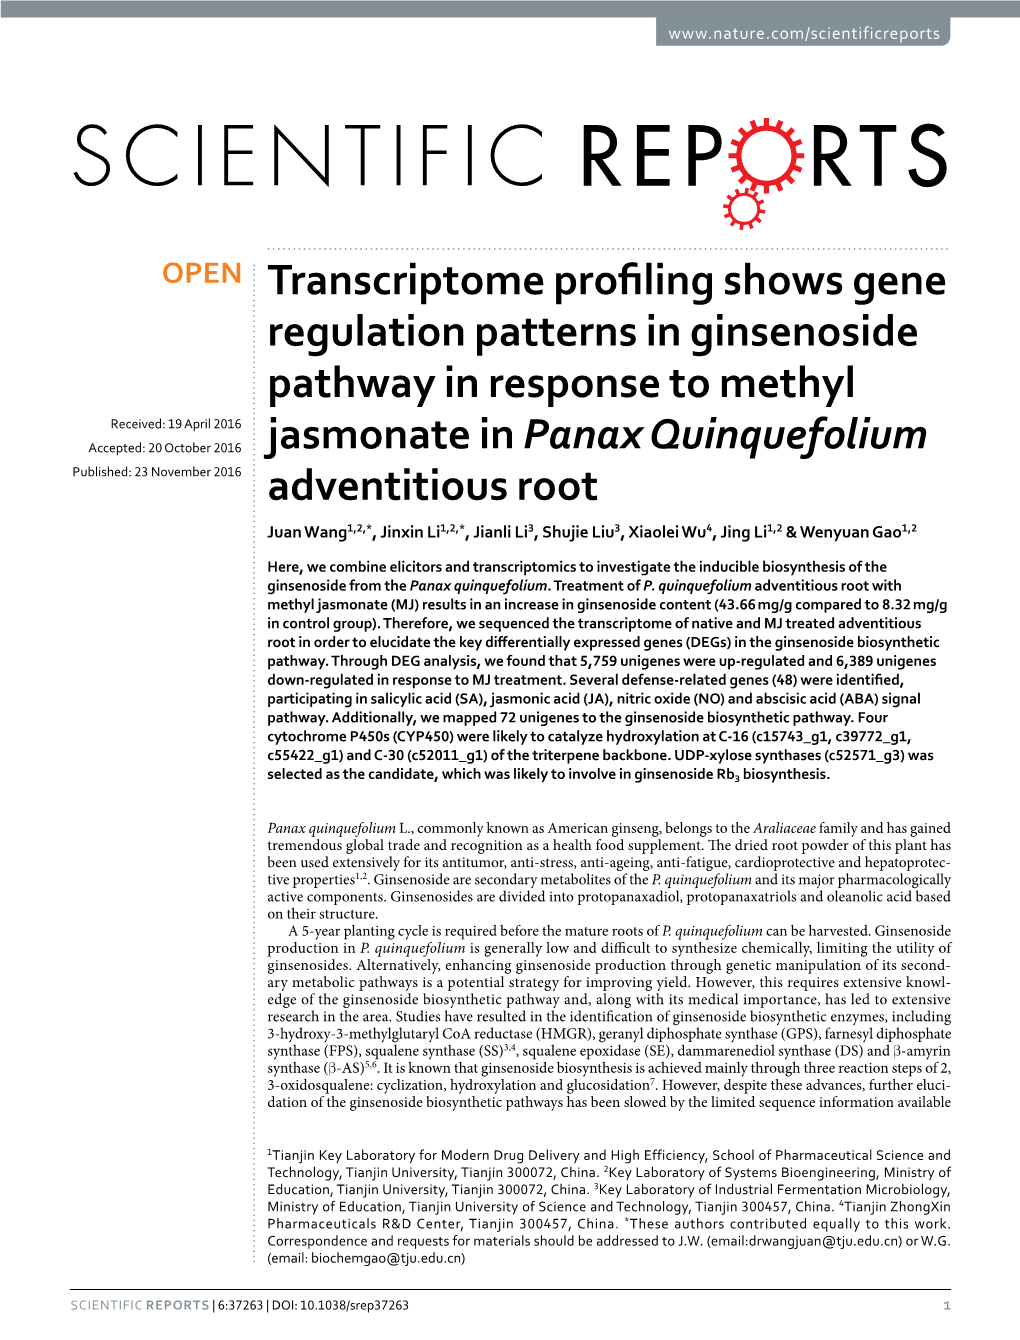 Transcriptome Profiling Shows Gene Regulation Patterns in Ginsenoside